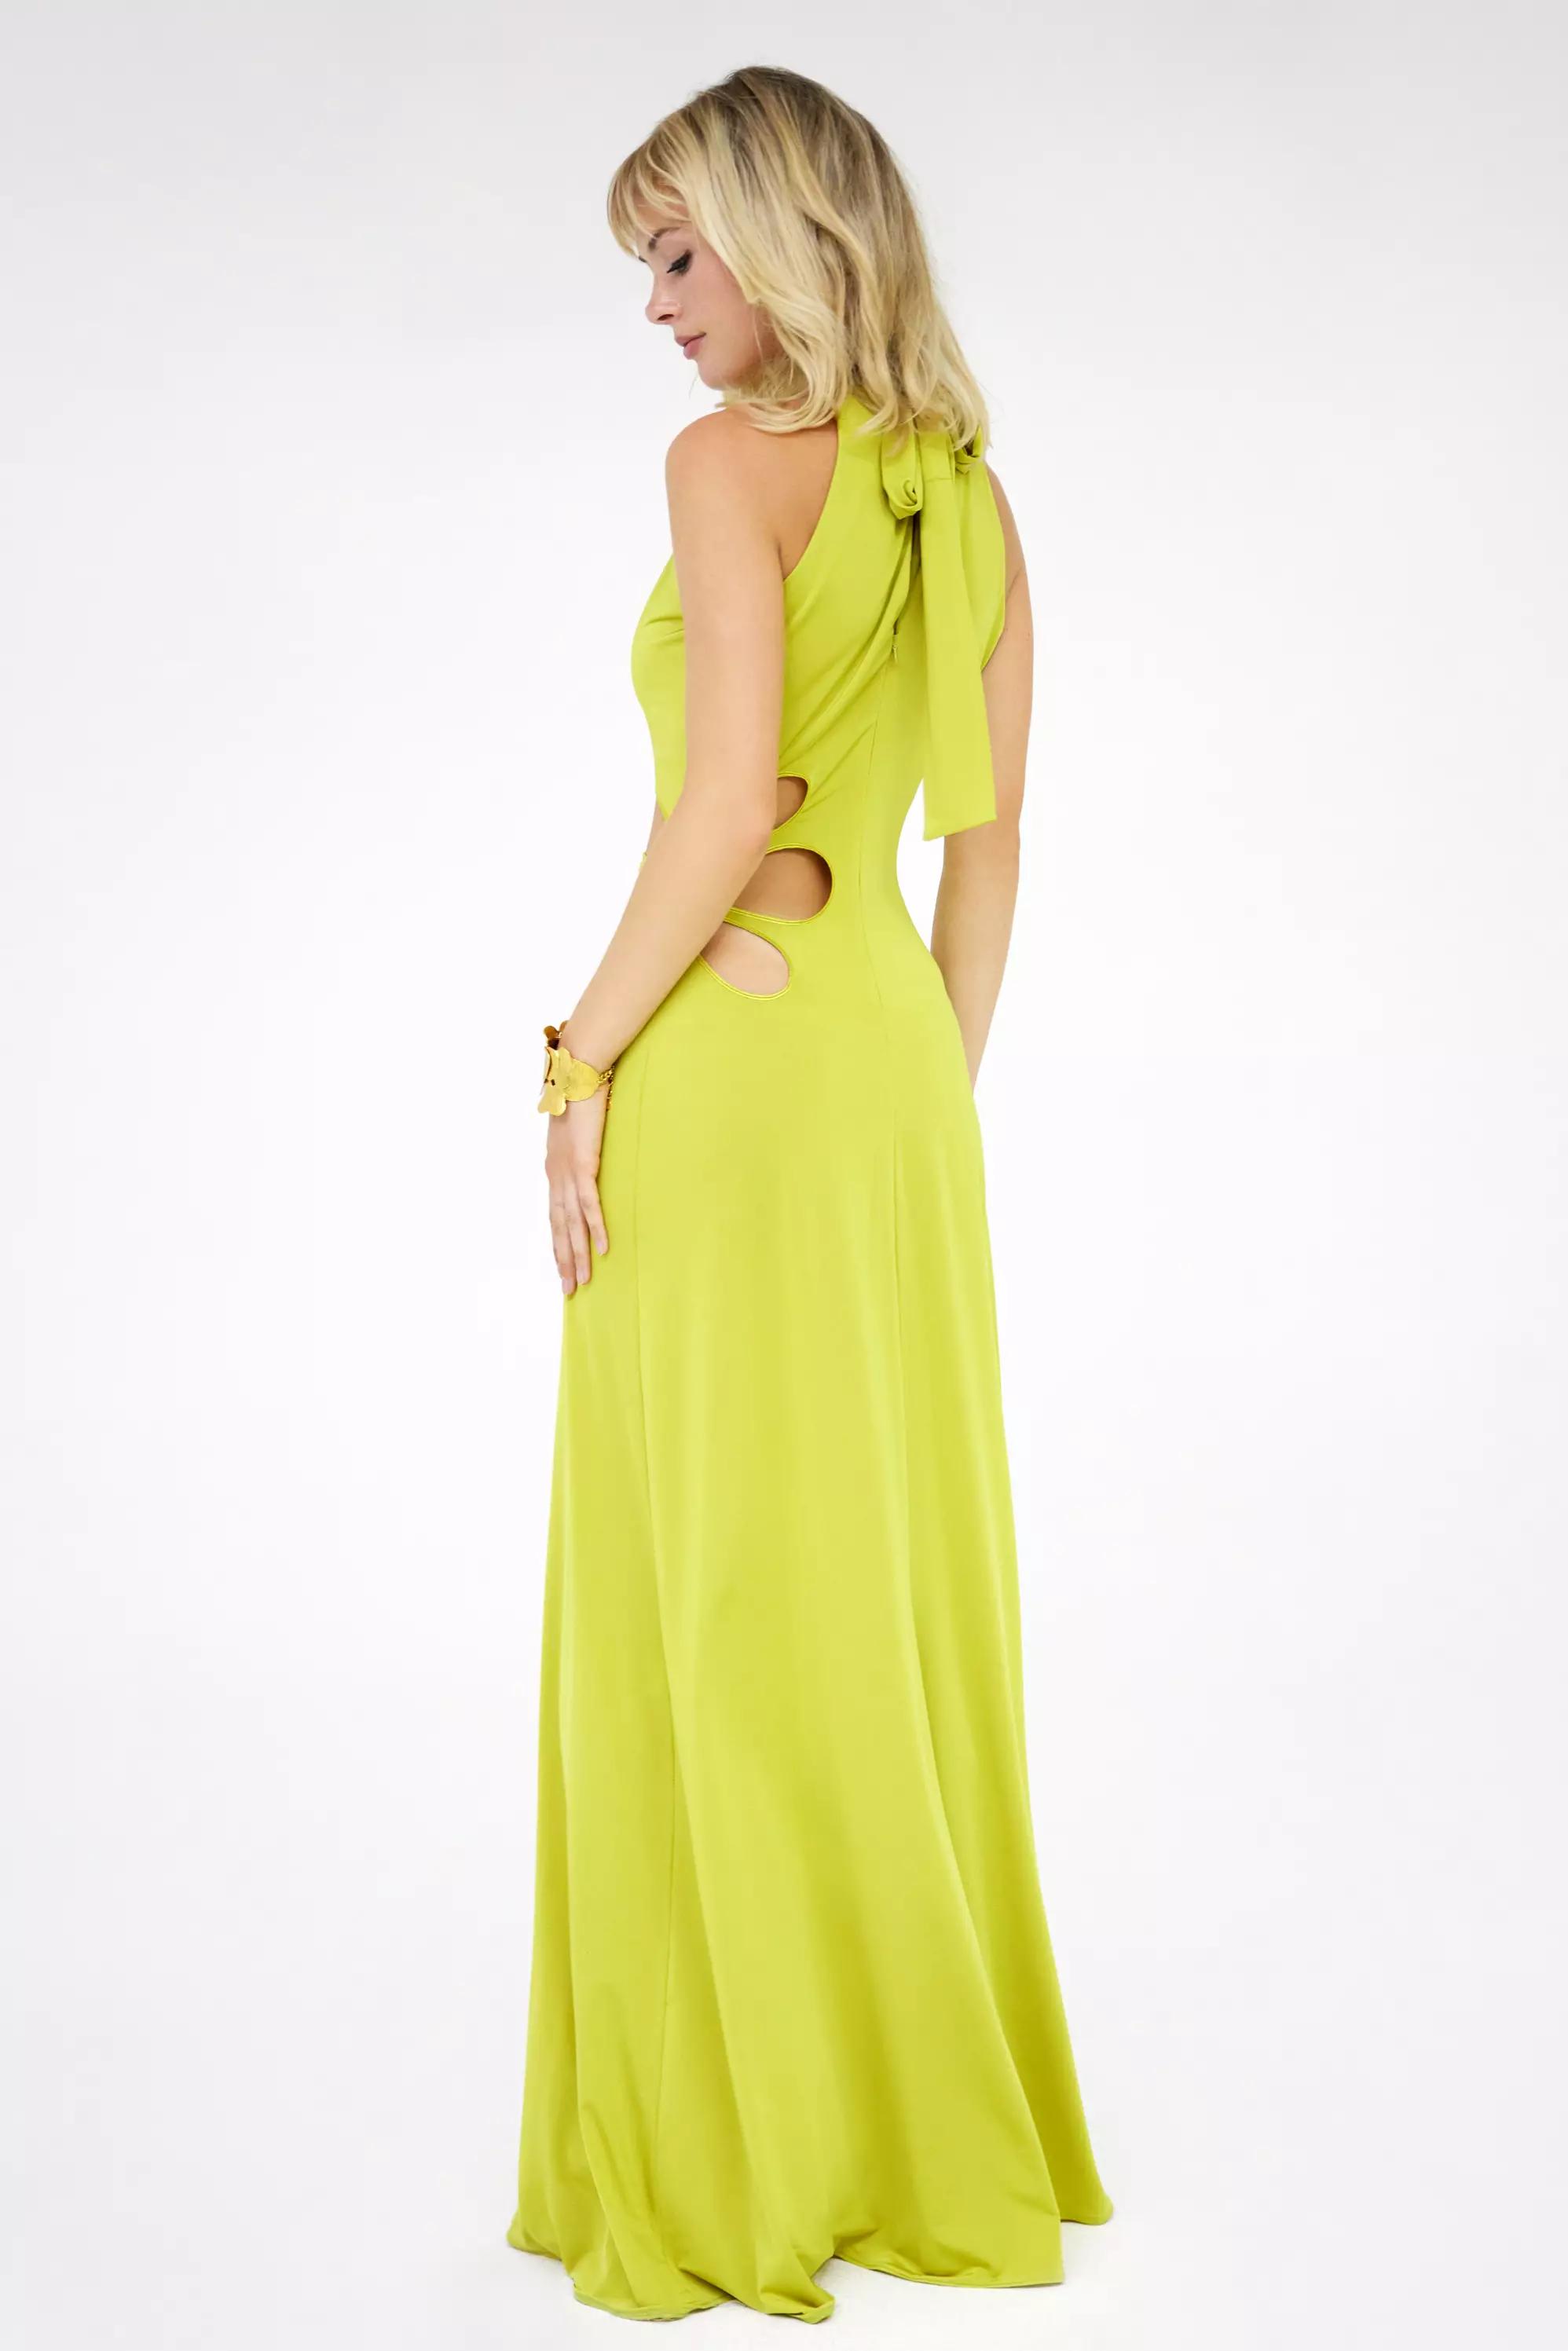 Pistachio green crepe sleeveless long dress